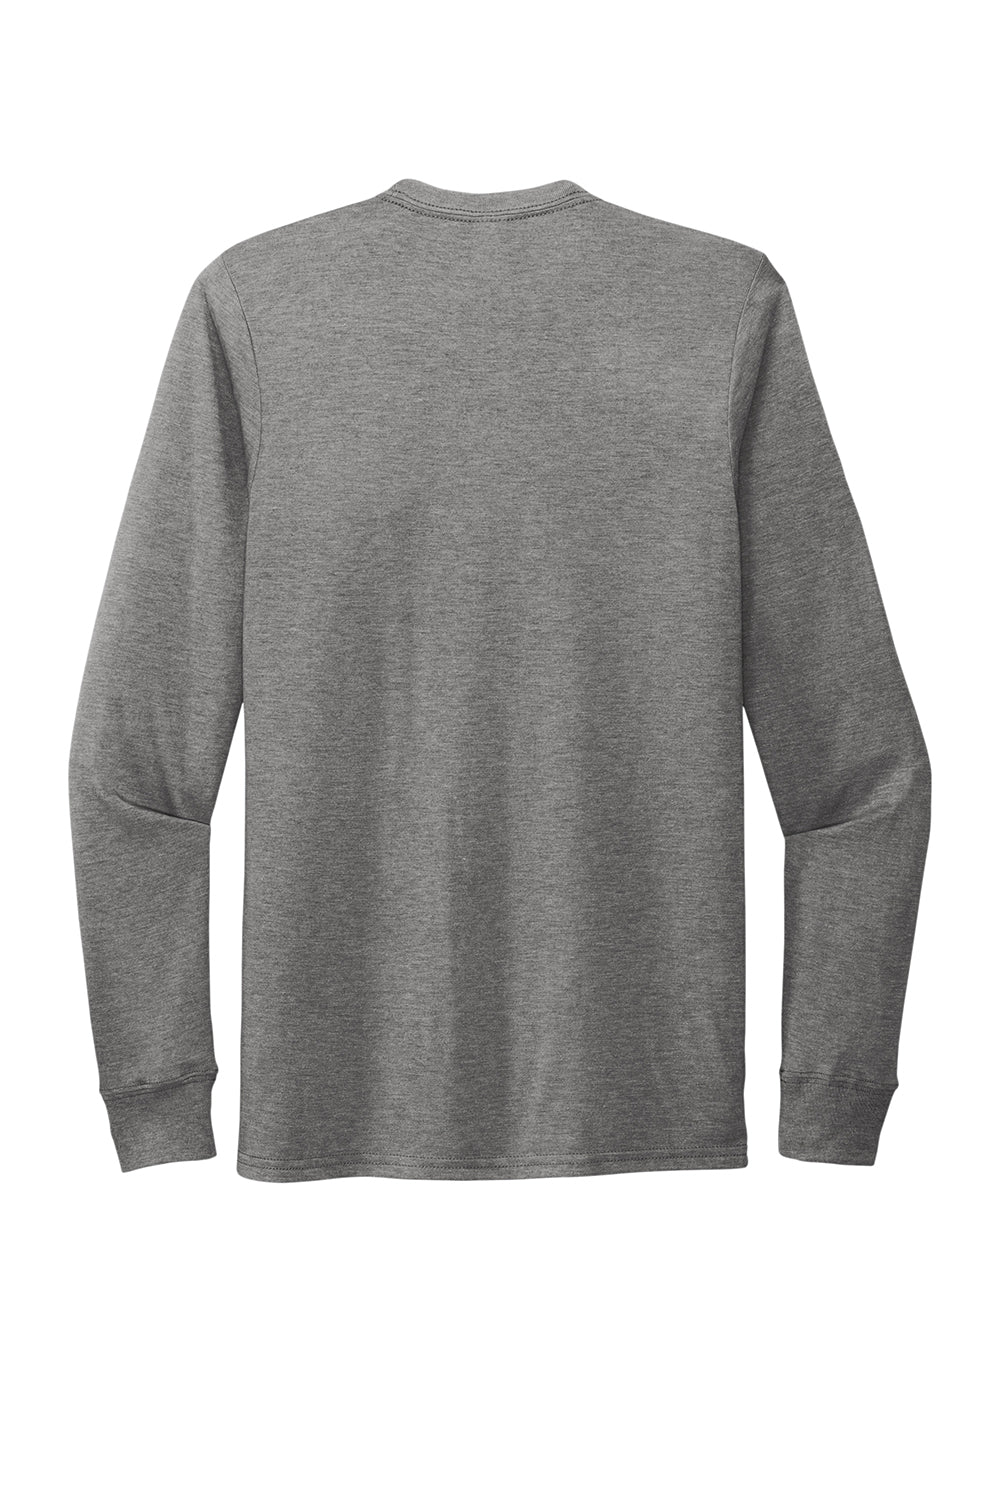 Allmade AL6004 Mens Long Sleeve Crewneck T-Shirt Aluminum Grey Flat Back